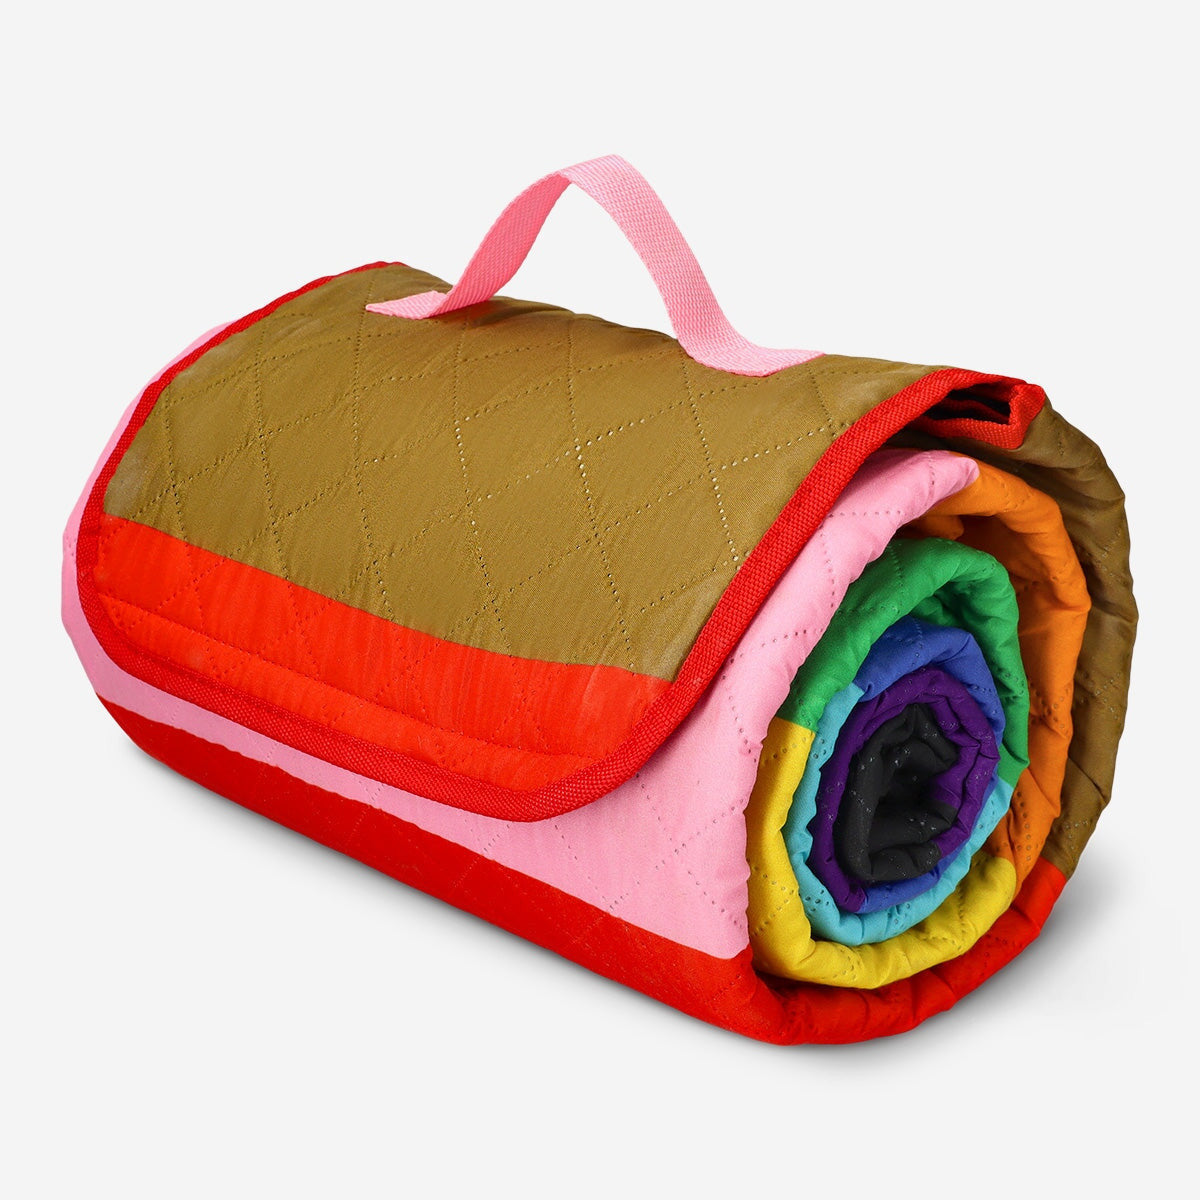 Rainbow picnic blanket. 220x150 cm Leisure Flying Tiger Copenhagen 